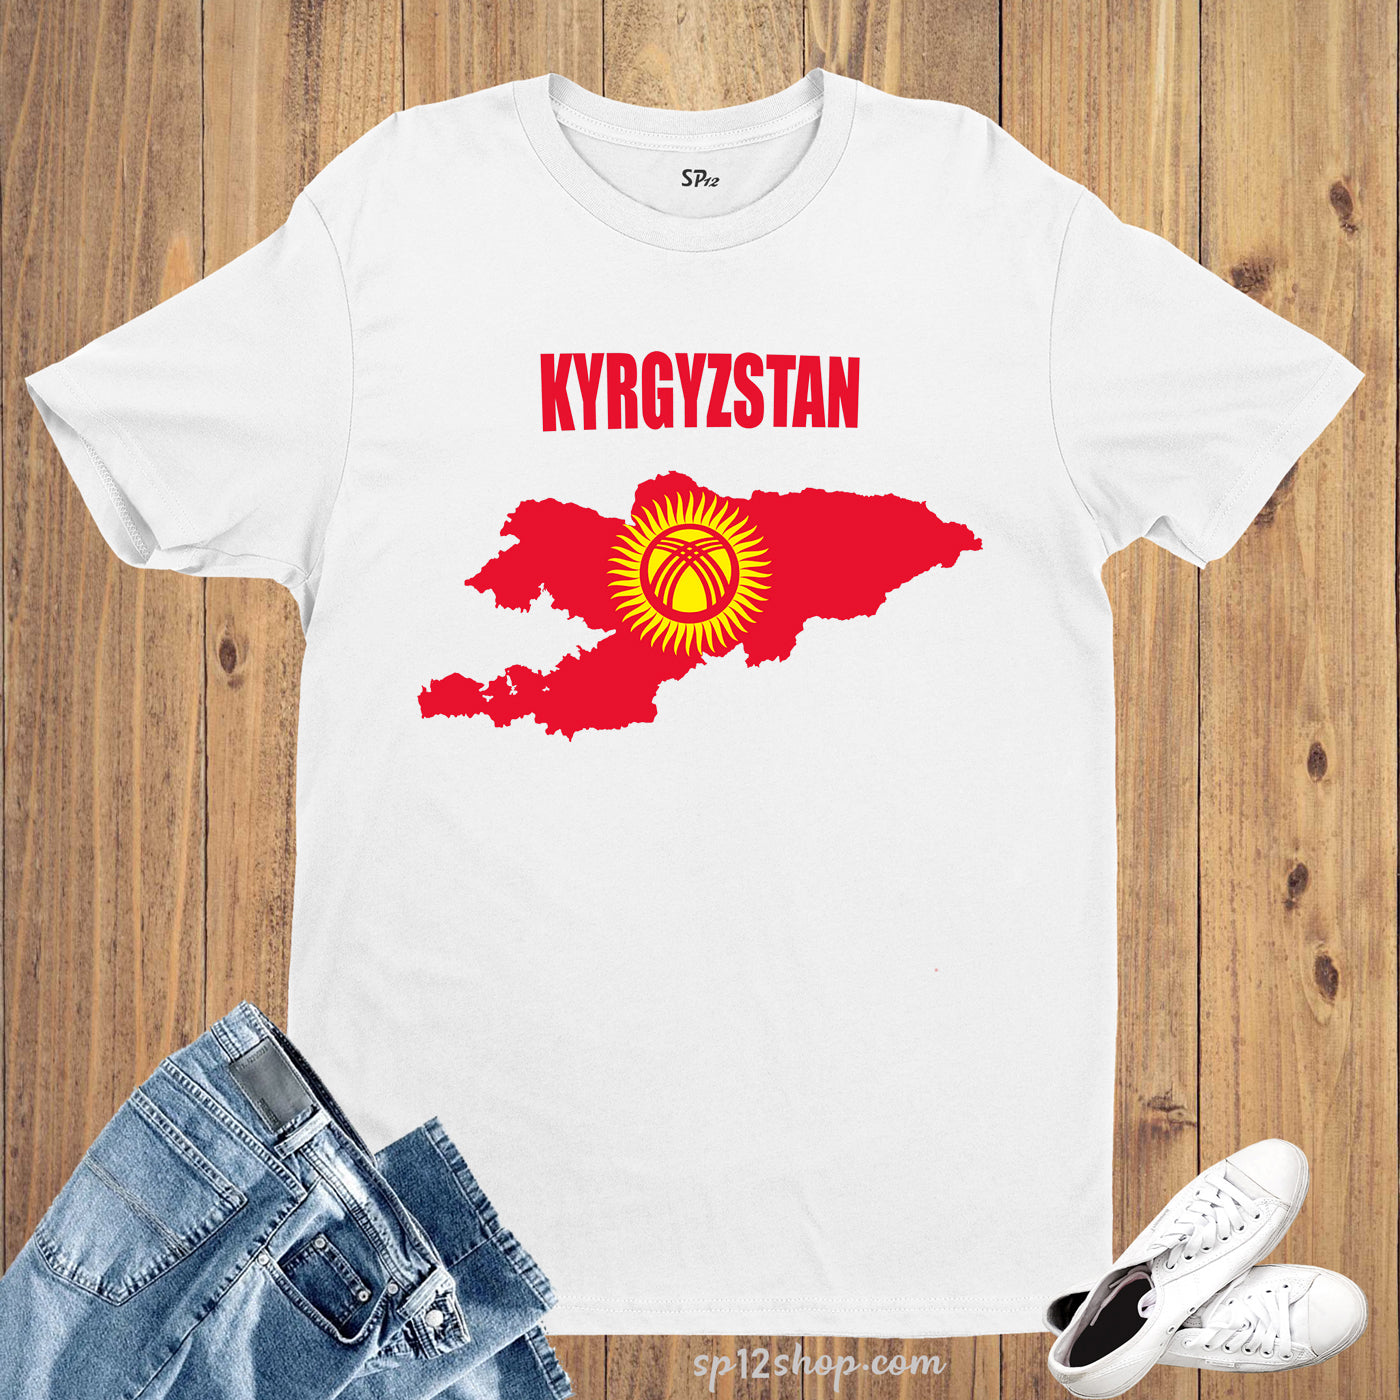 kyrgyzstan Flag T Shirt Olympics FIFA World Cup Country Flag Tee Shirt